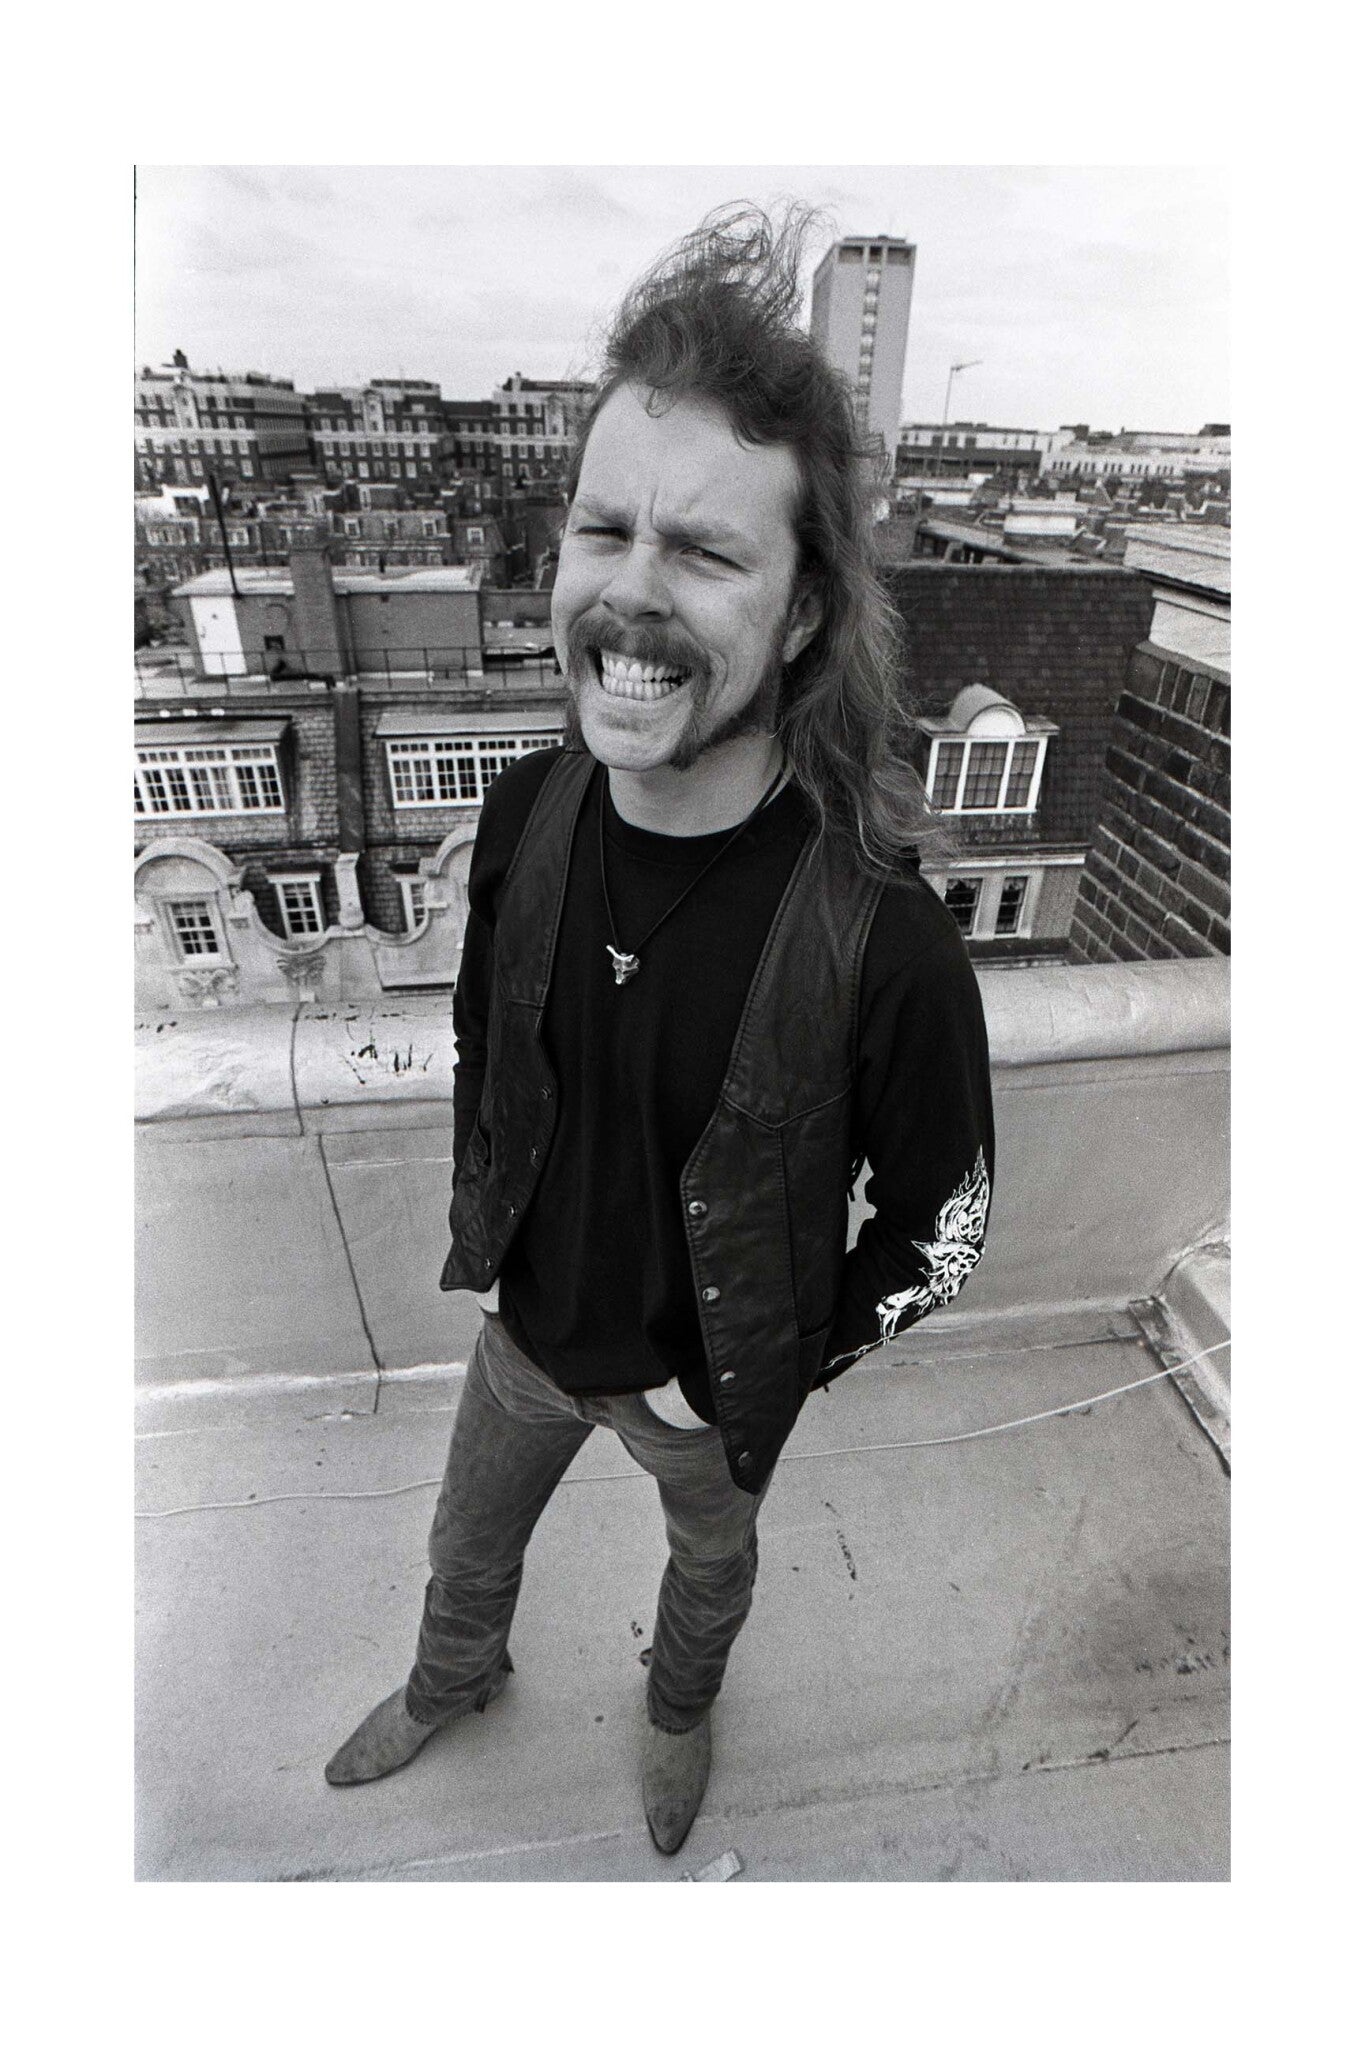 Metallica - James Hetfield in a London Rooftop, England, 1992 Print (1/2)